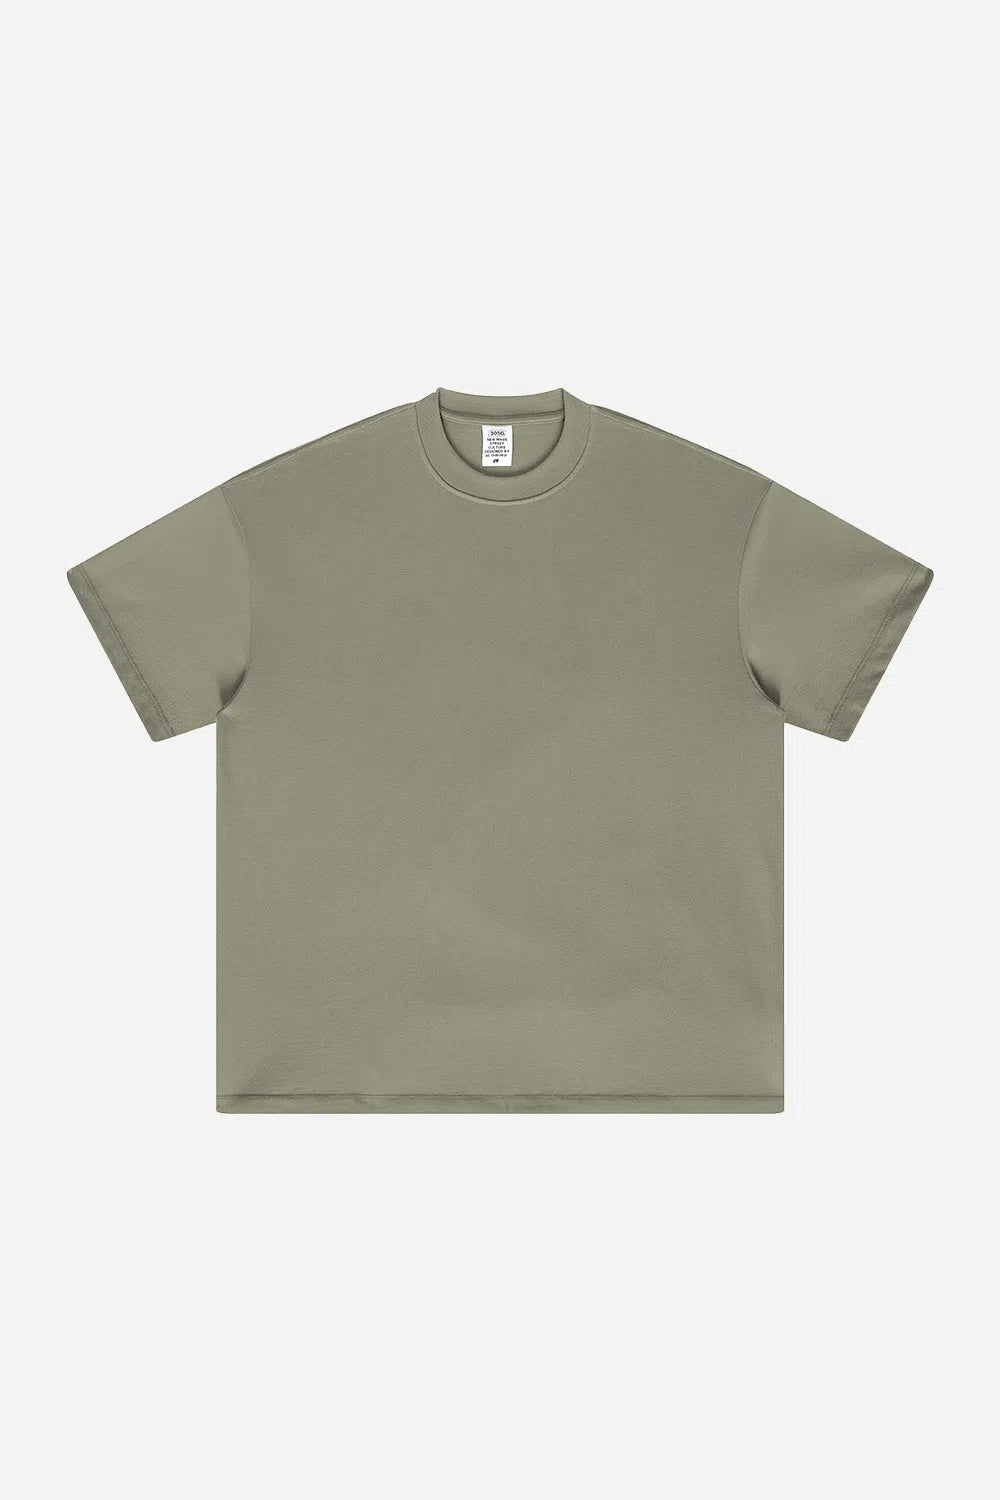 T-Shirt Blank Heavy 100% Cotton - SMOKE-LOTABY